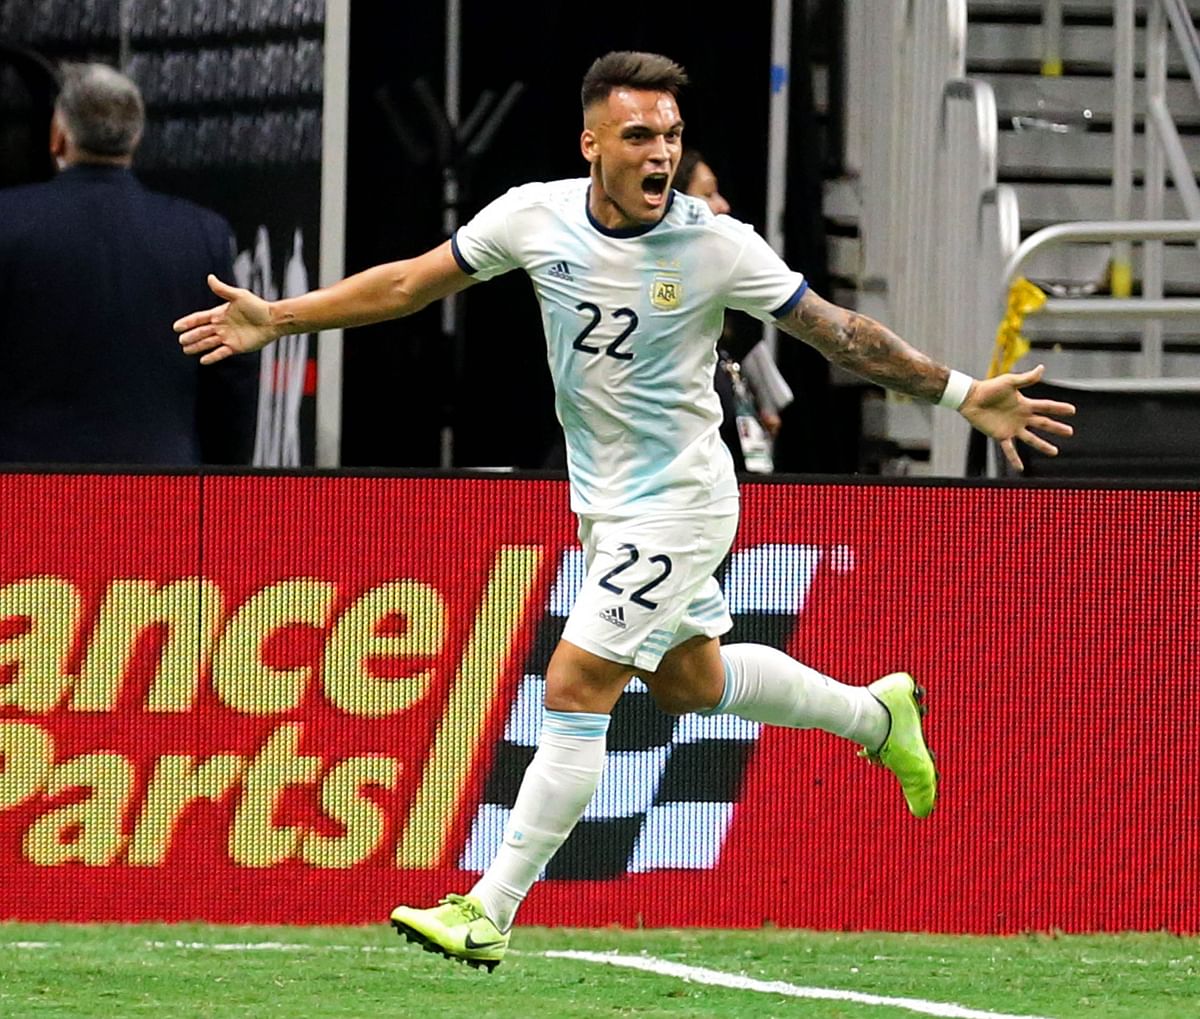 Martinez celebrates scoring one of his three goals. AFP